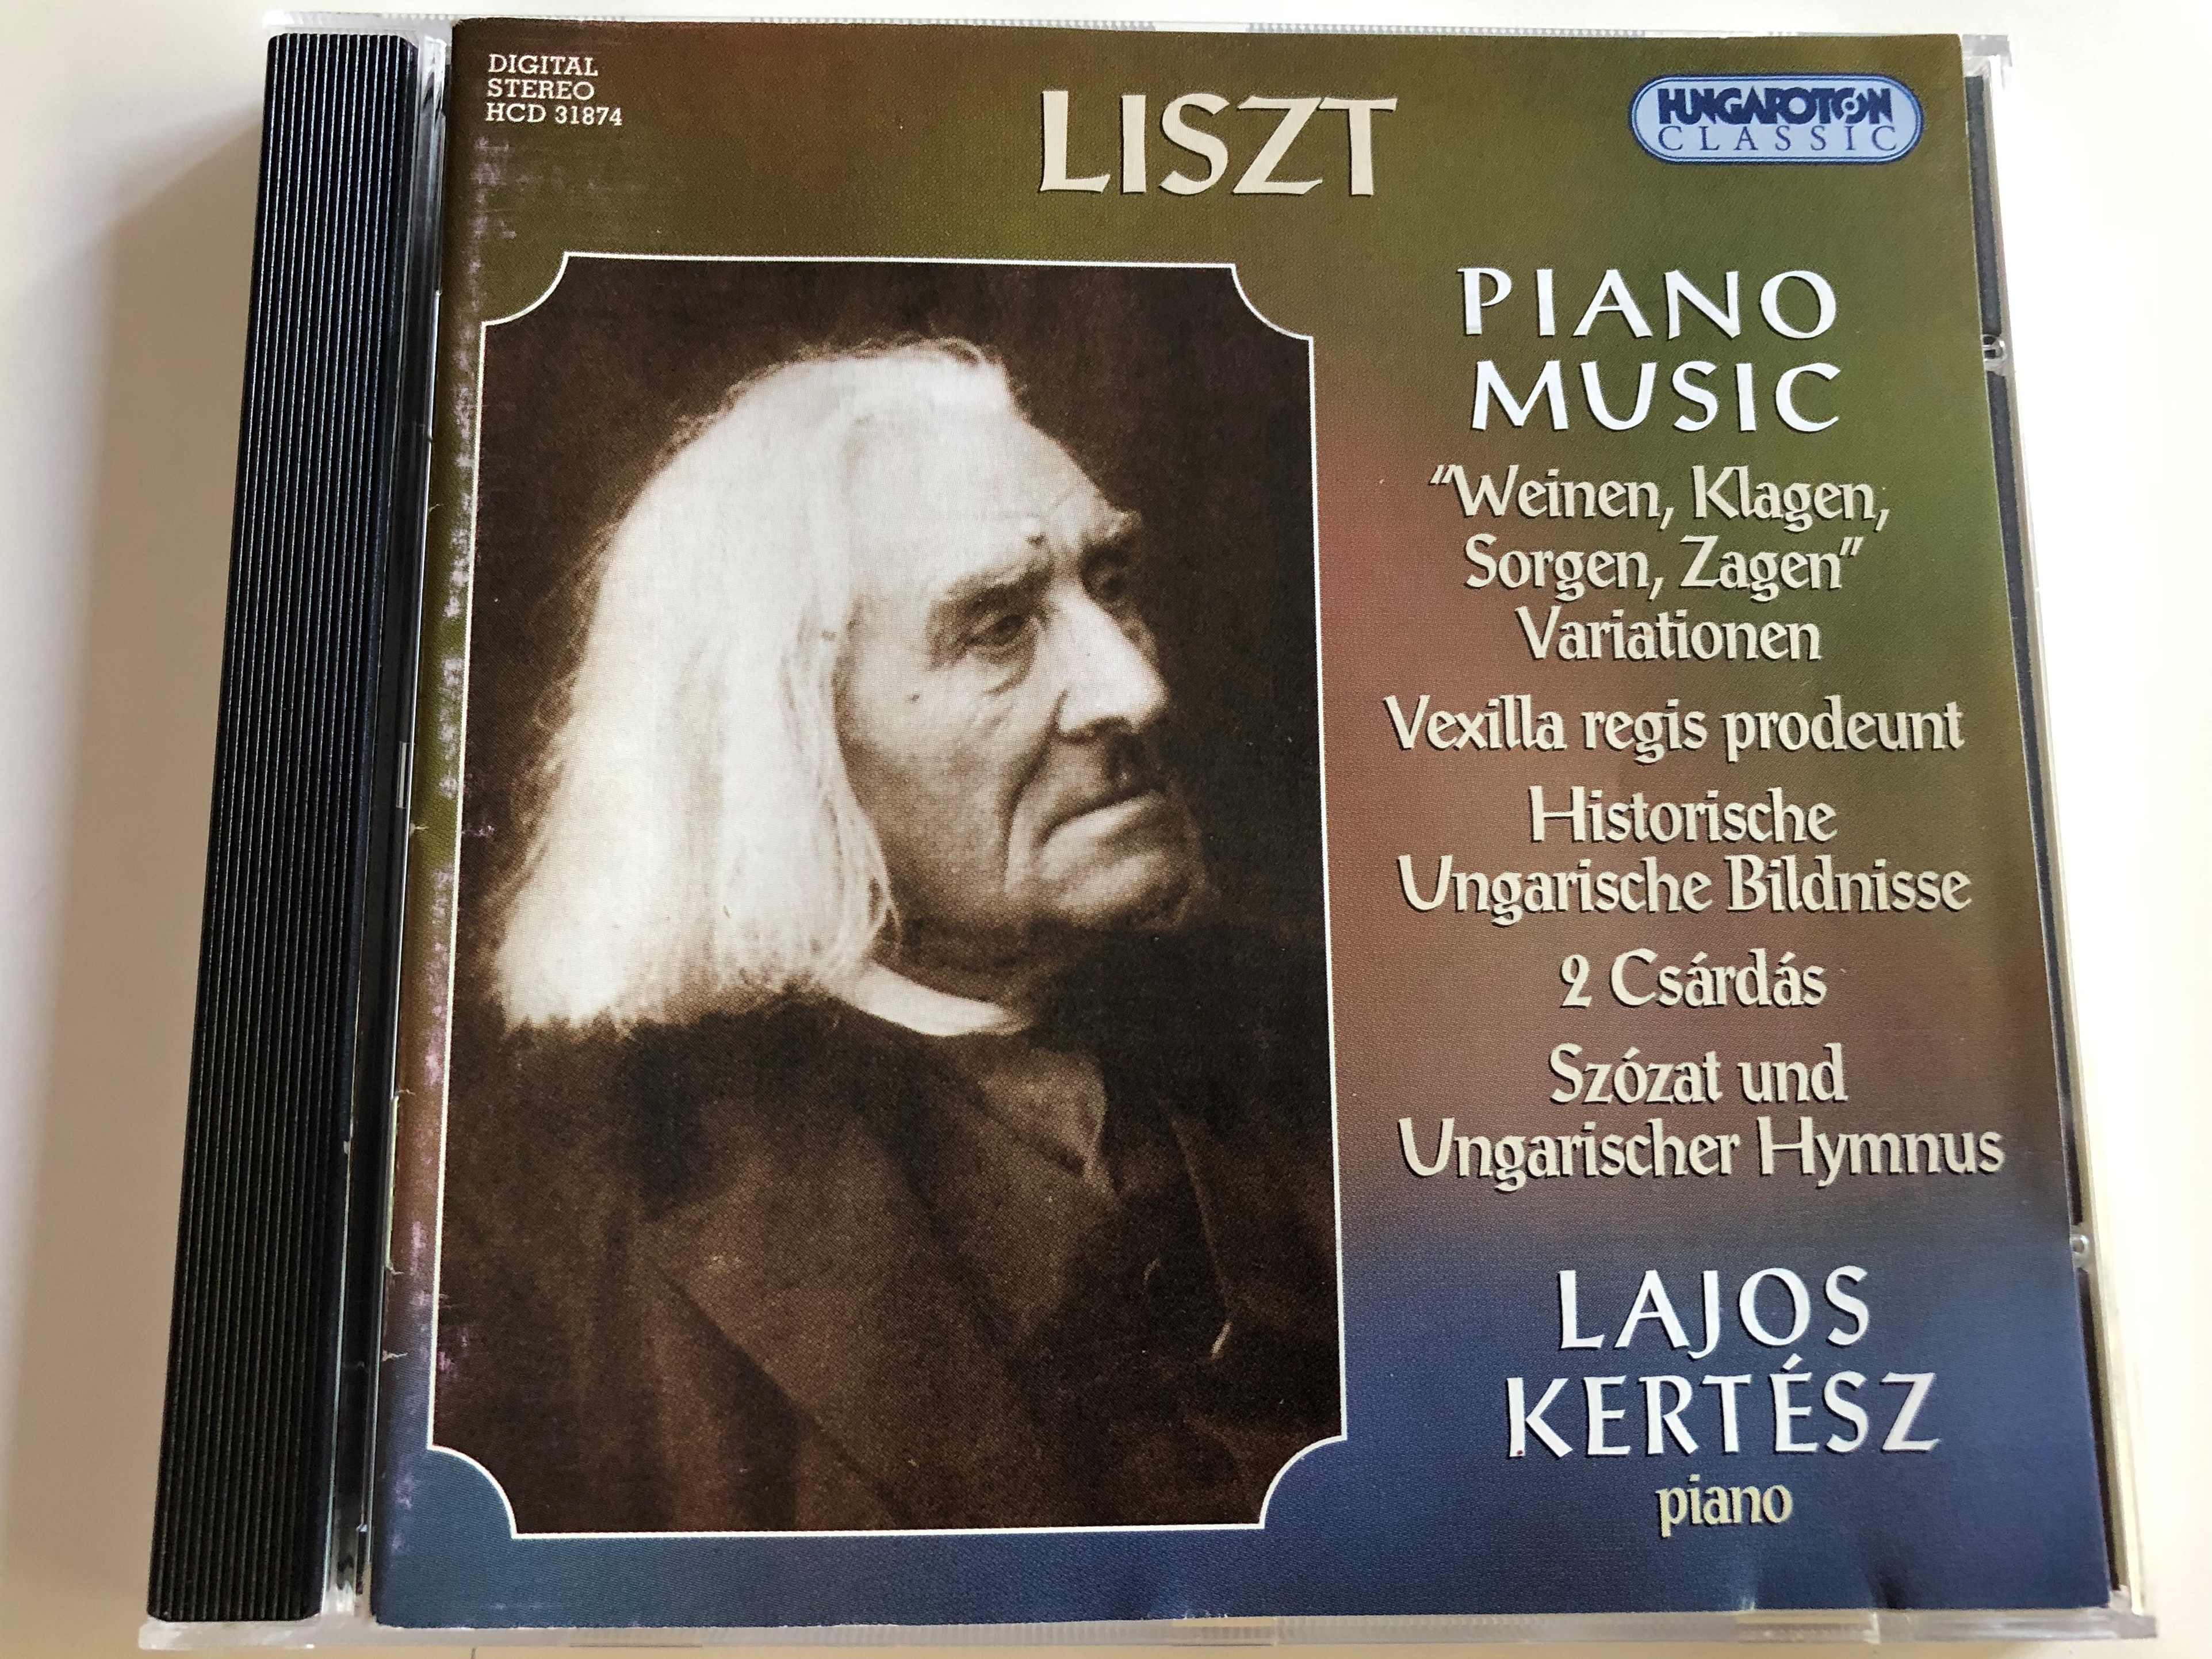 liszt-piano-music-weinen-klagen-sorgen-zagen-variationen-vexilla-regis-prodeunt-historische-ungarische-bildnisse-2-cs-rd-s-sz-zat-und-ungarischer-hymnus-lajos-kert-sz-piano-hungaroton-classic-hcd-31874-1-.jpg